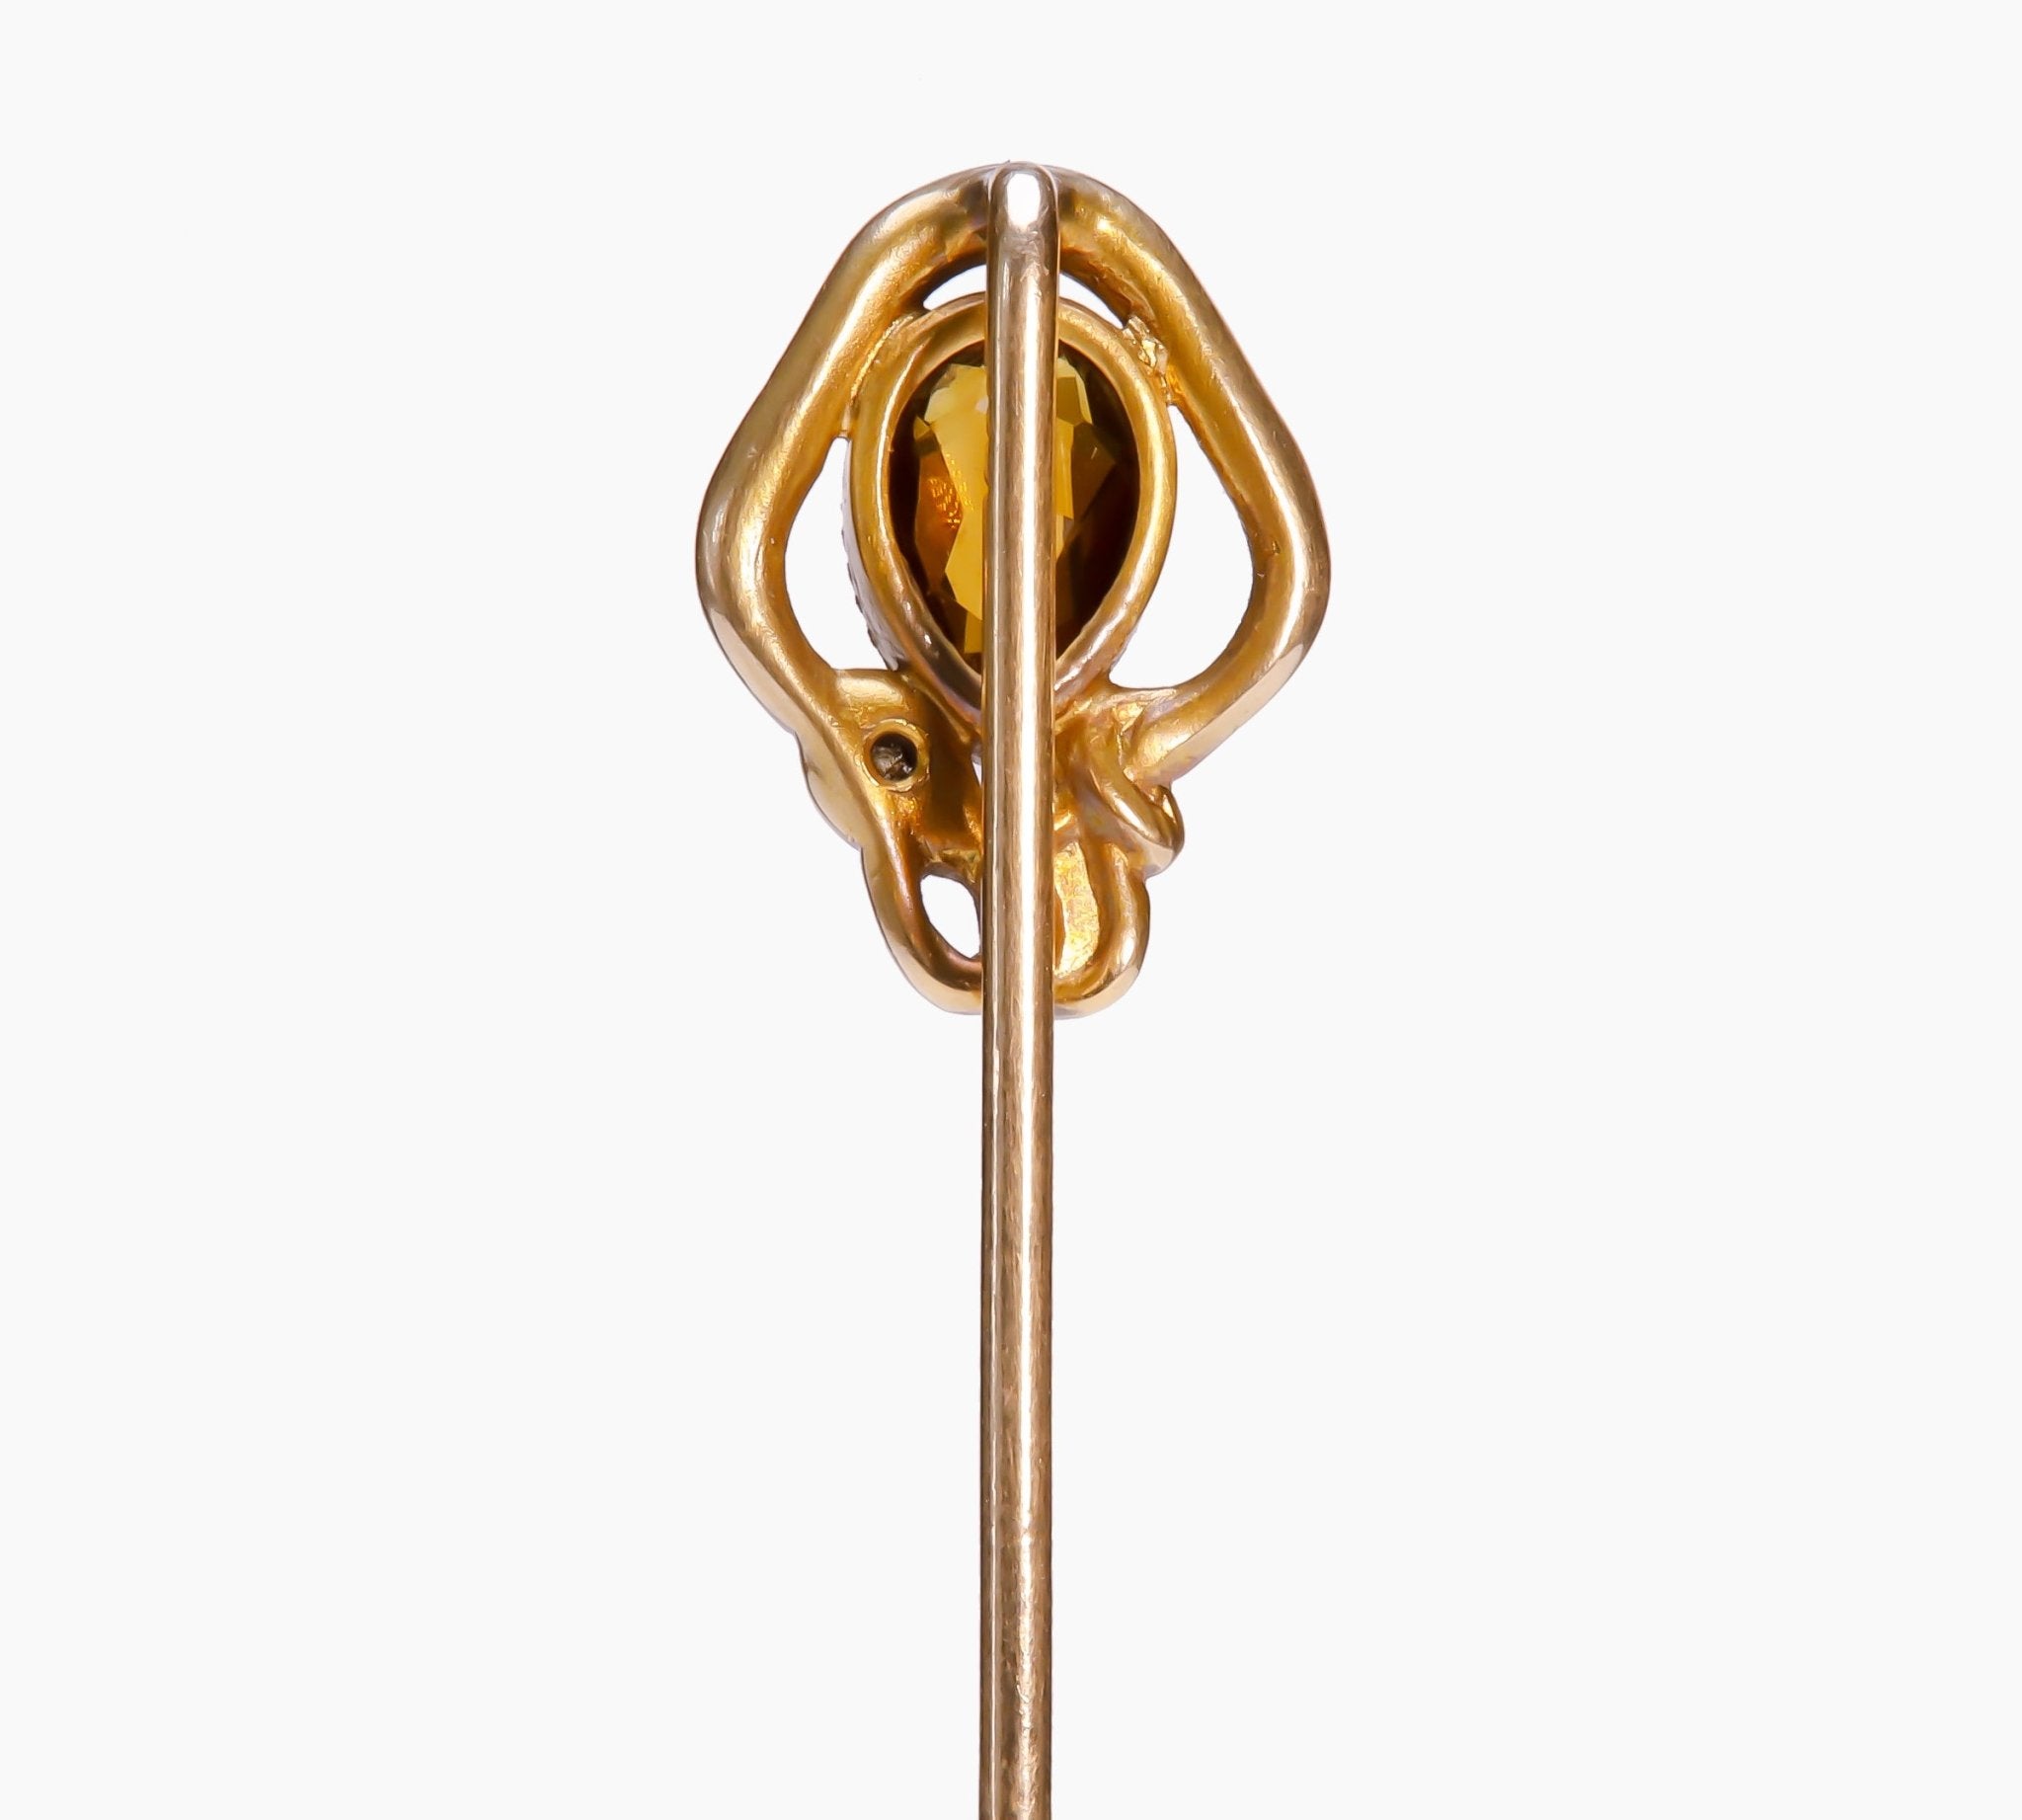 Antique Gold Citrine Diamond Snake Stick Pin - DSF Antique Jewelry